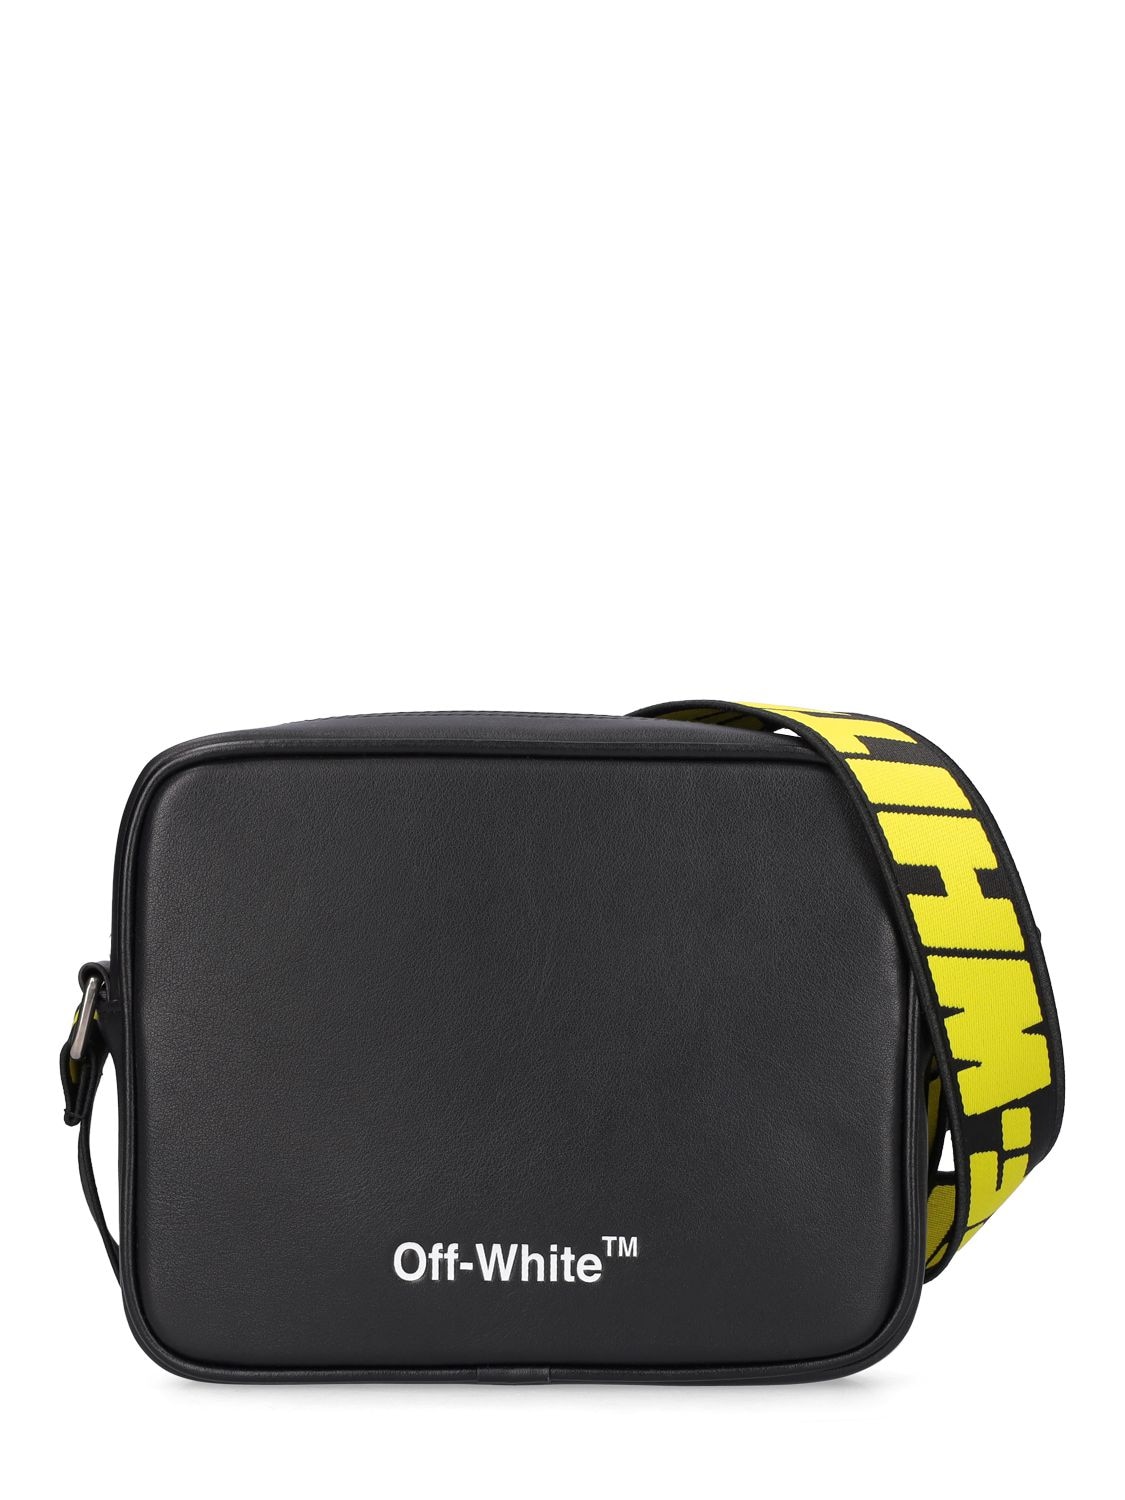 Off-White c/o Virgil Abloh Nylon Crossbody Bag W/ Webbing in Black